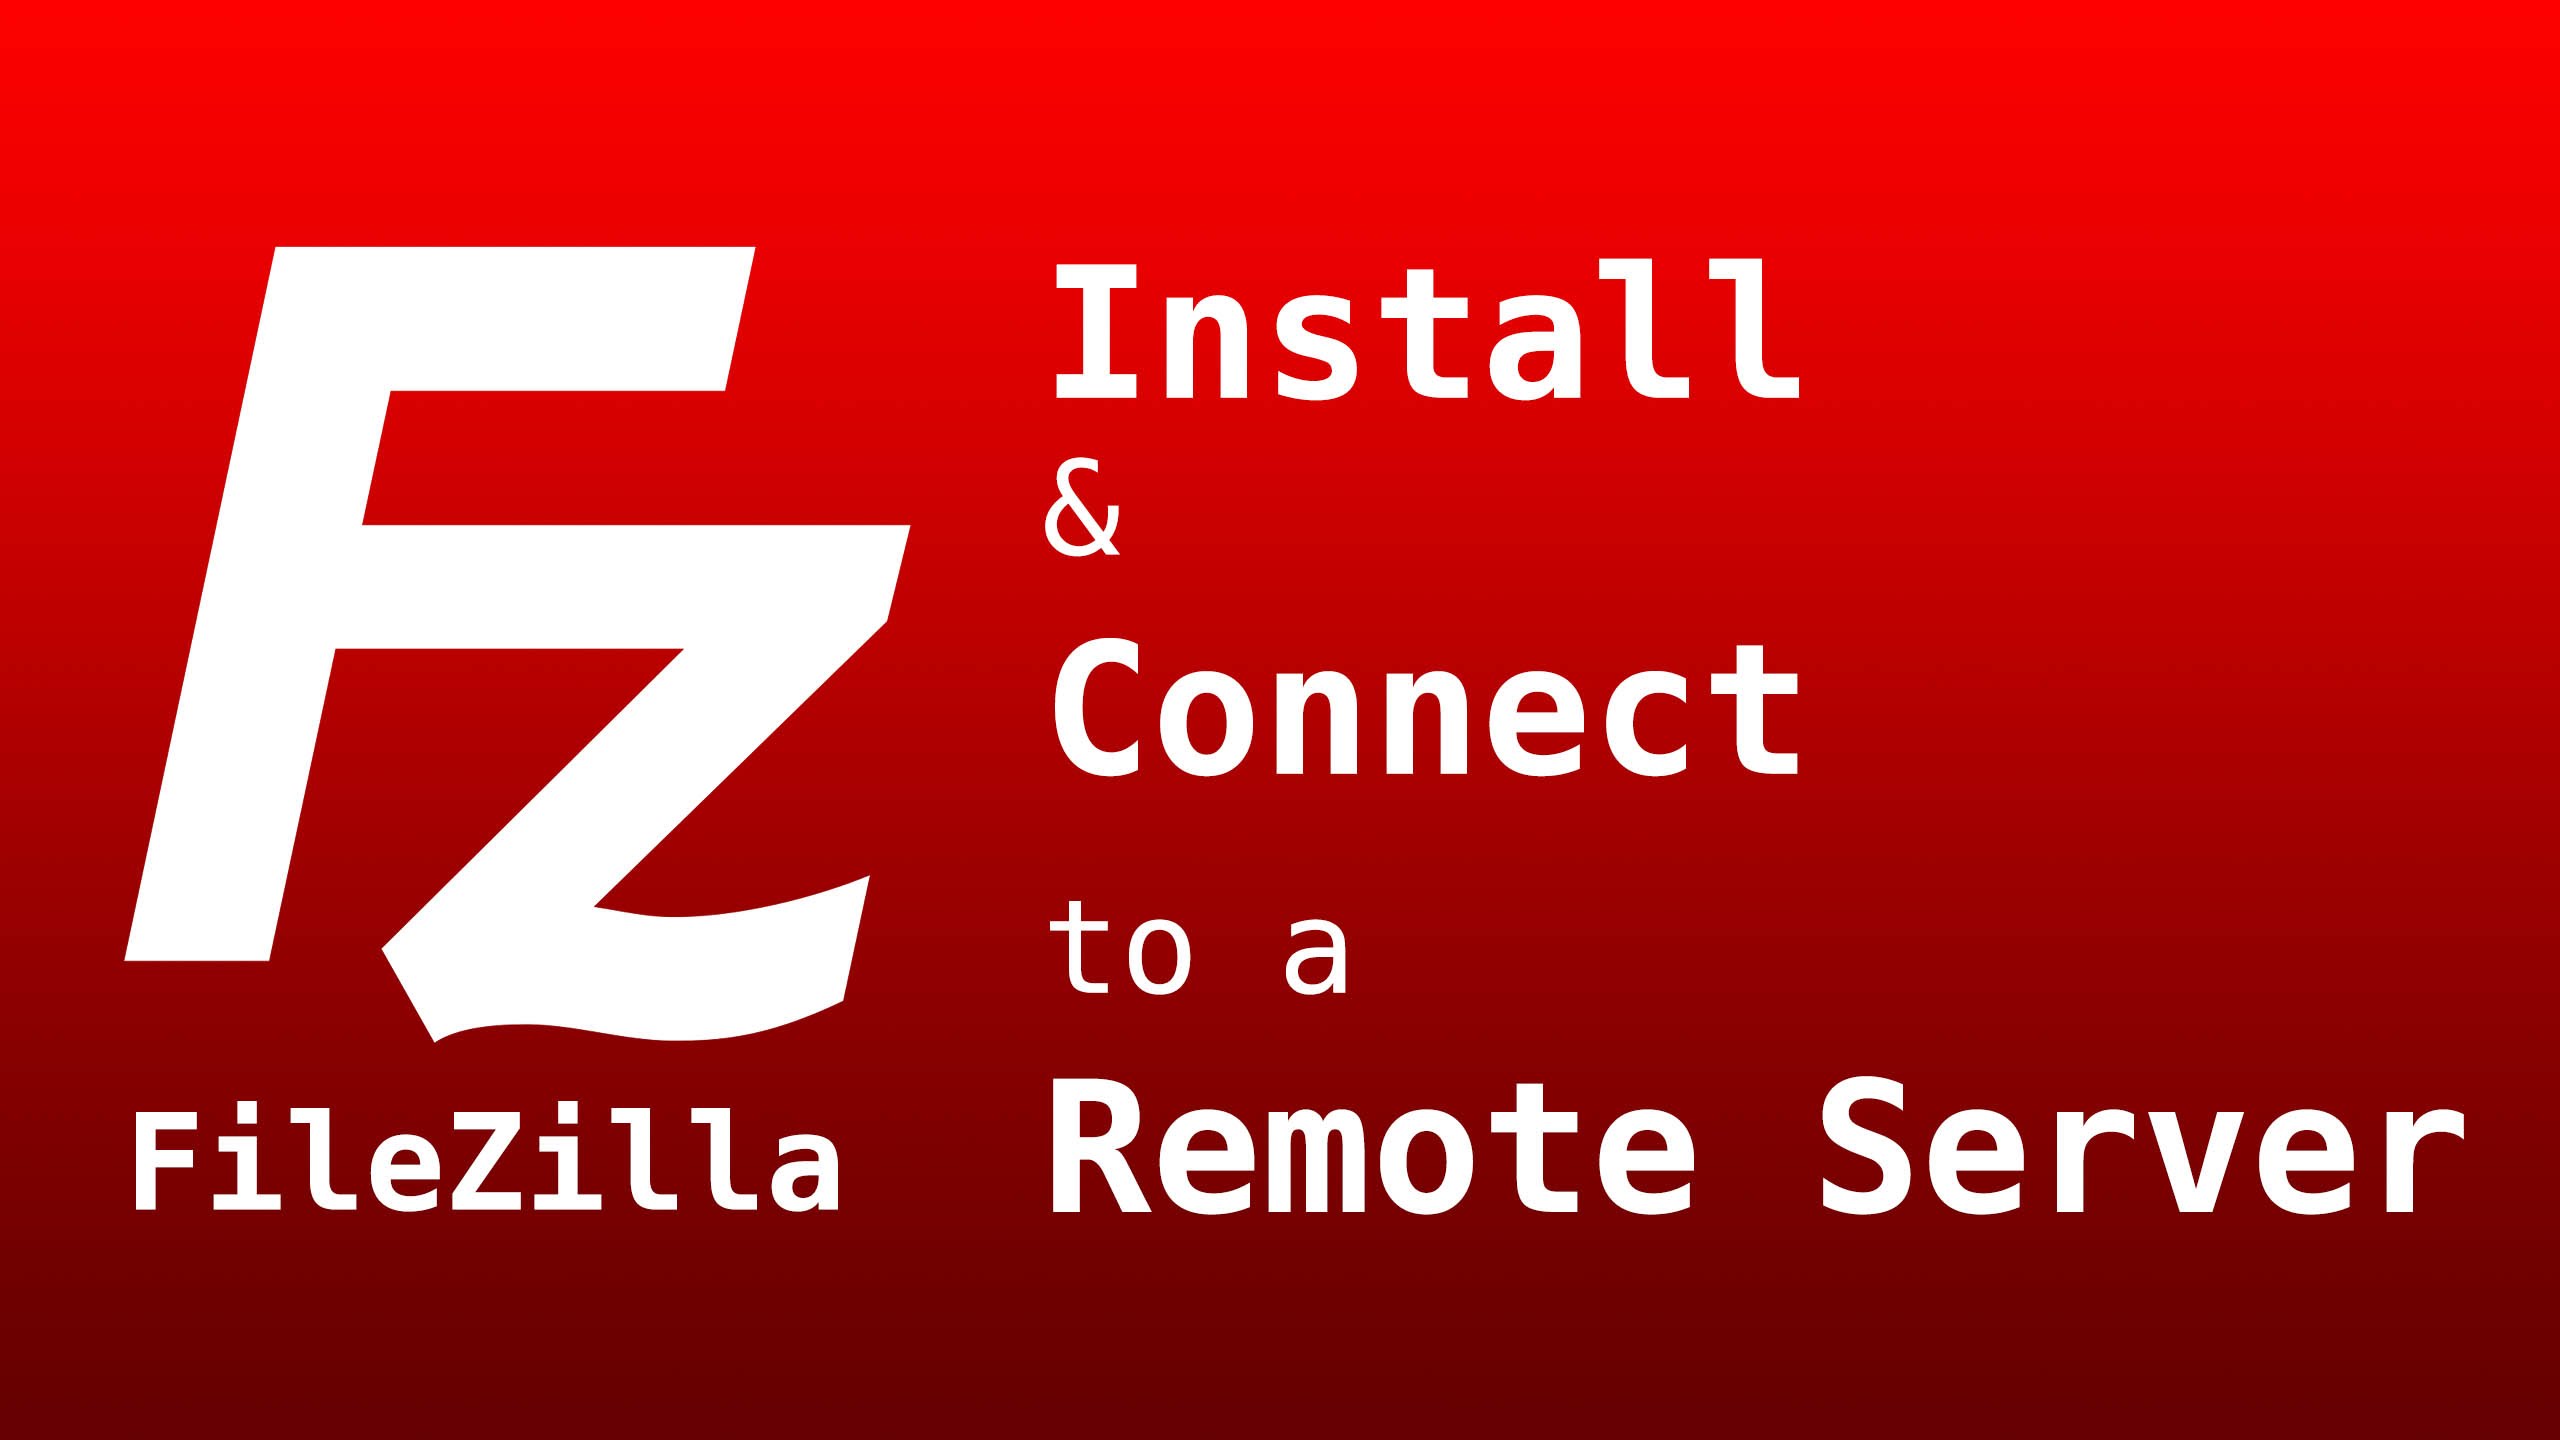 filezilla server setup download